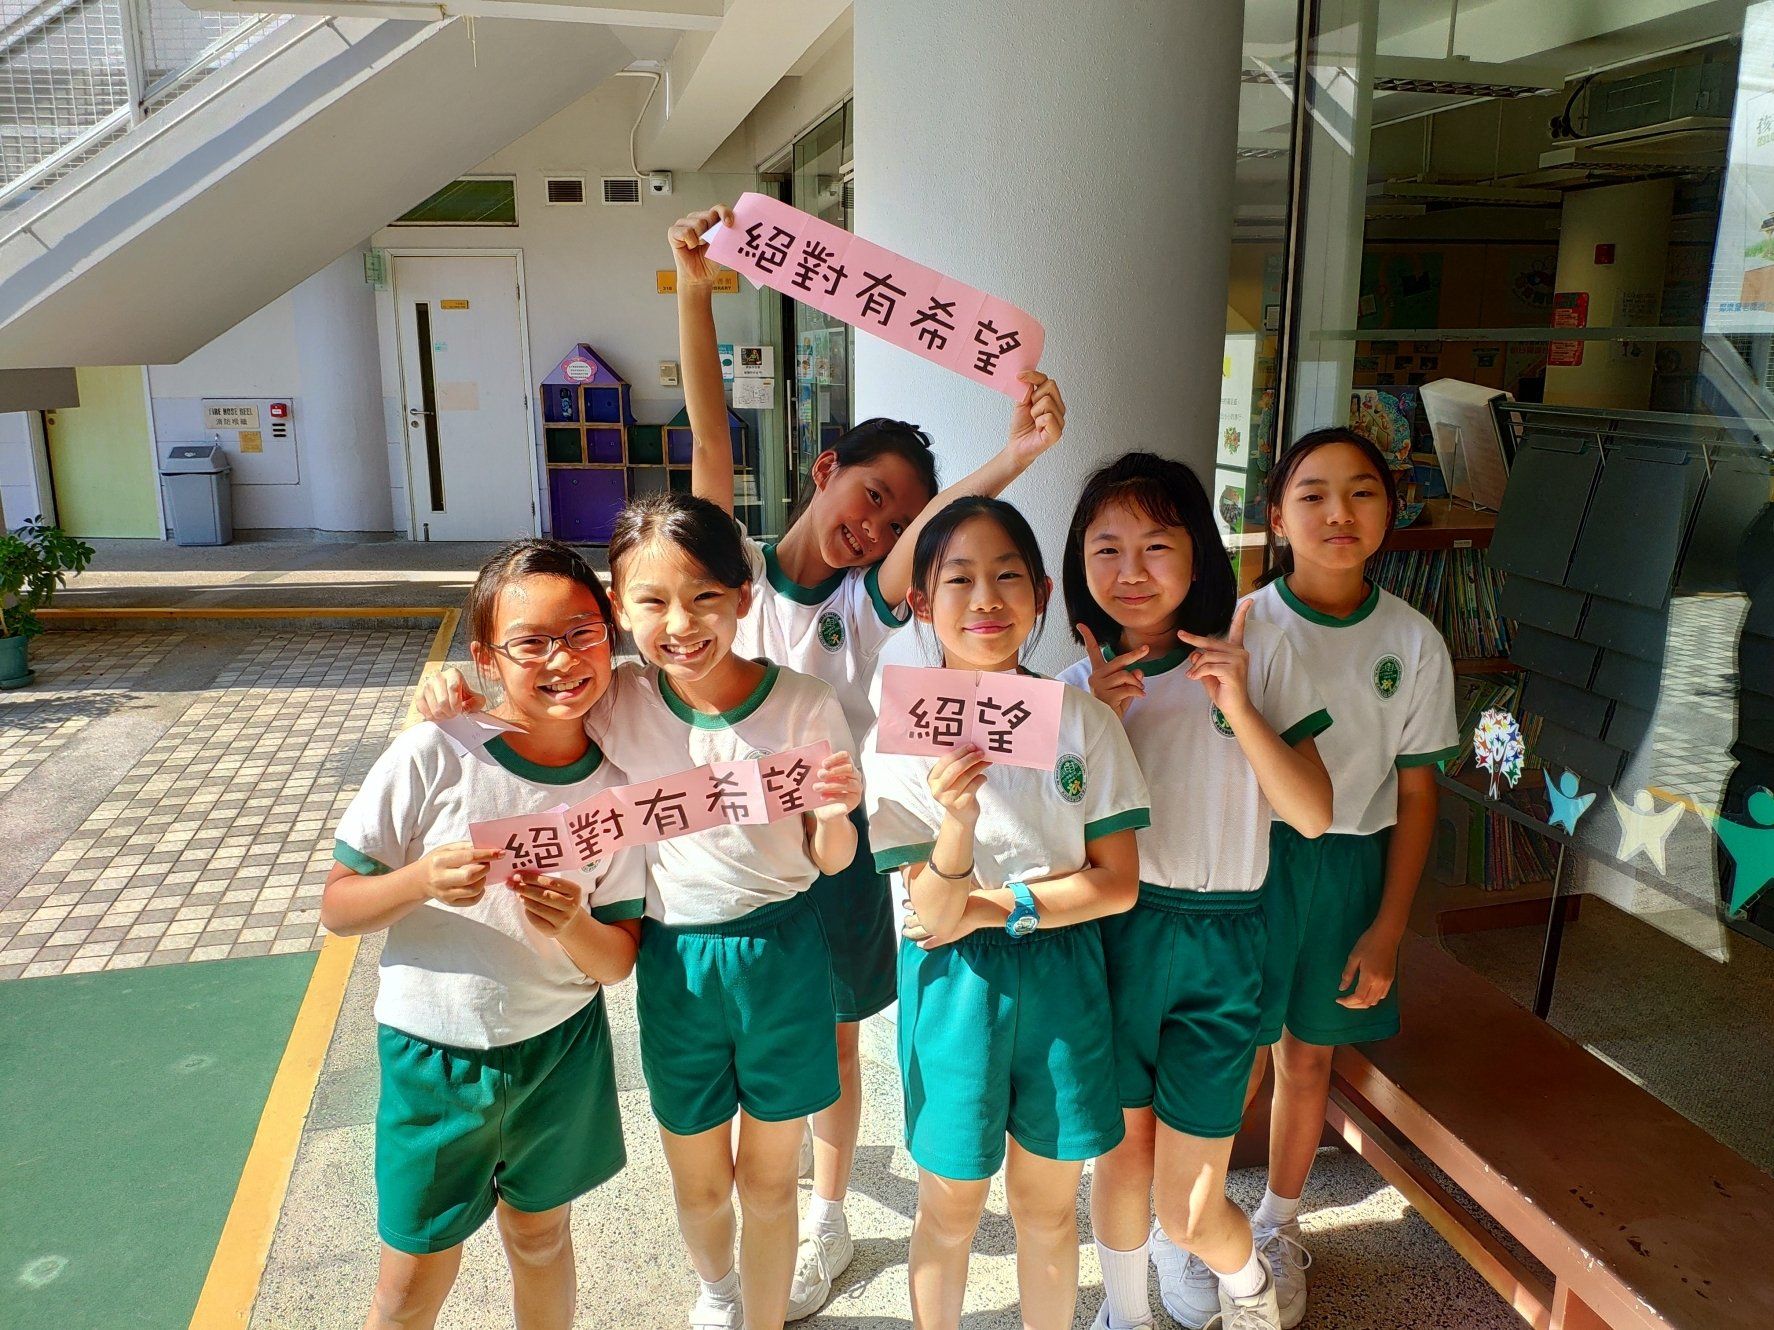 The Education University of Hong Kong Jockey Club Primary School